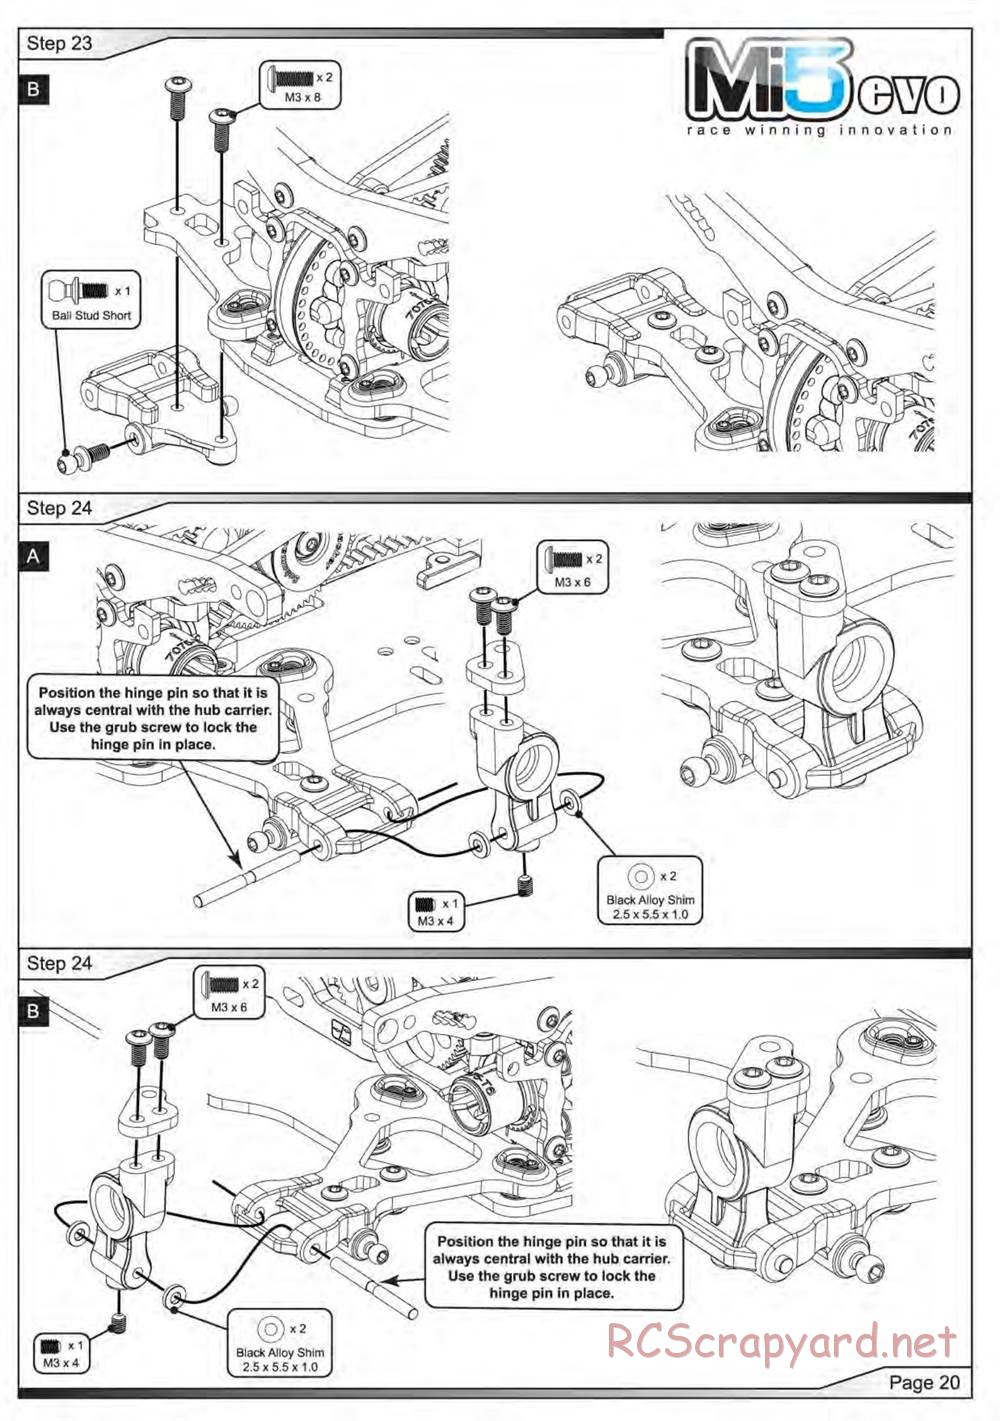 Schumacher - Mi5 Evo - Manual - Page 21